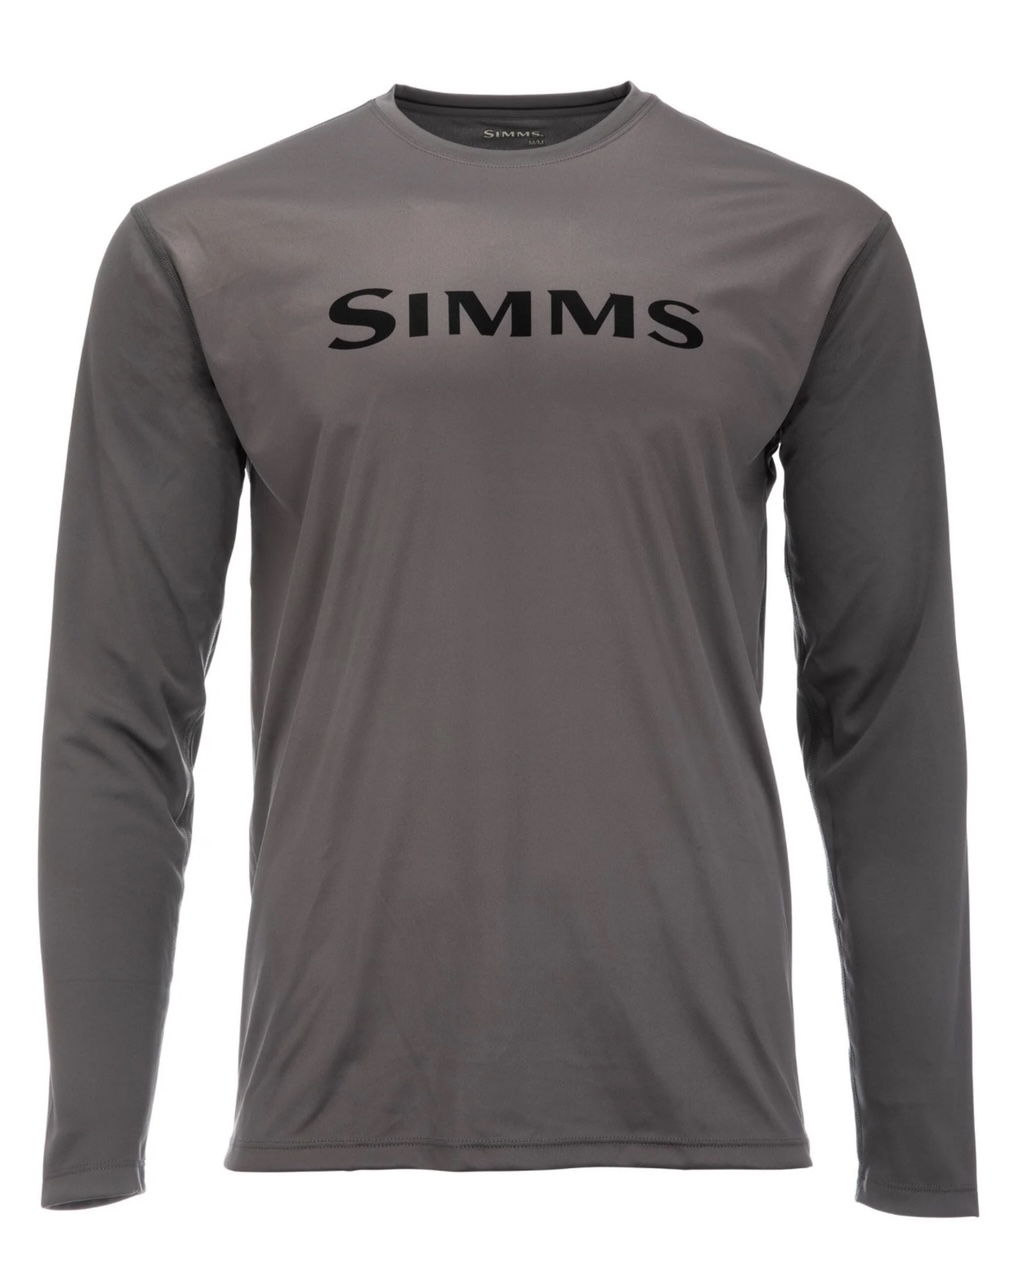 Simms M's Tech Tee - Steel - Medium